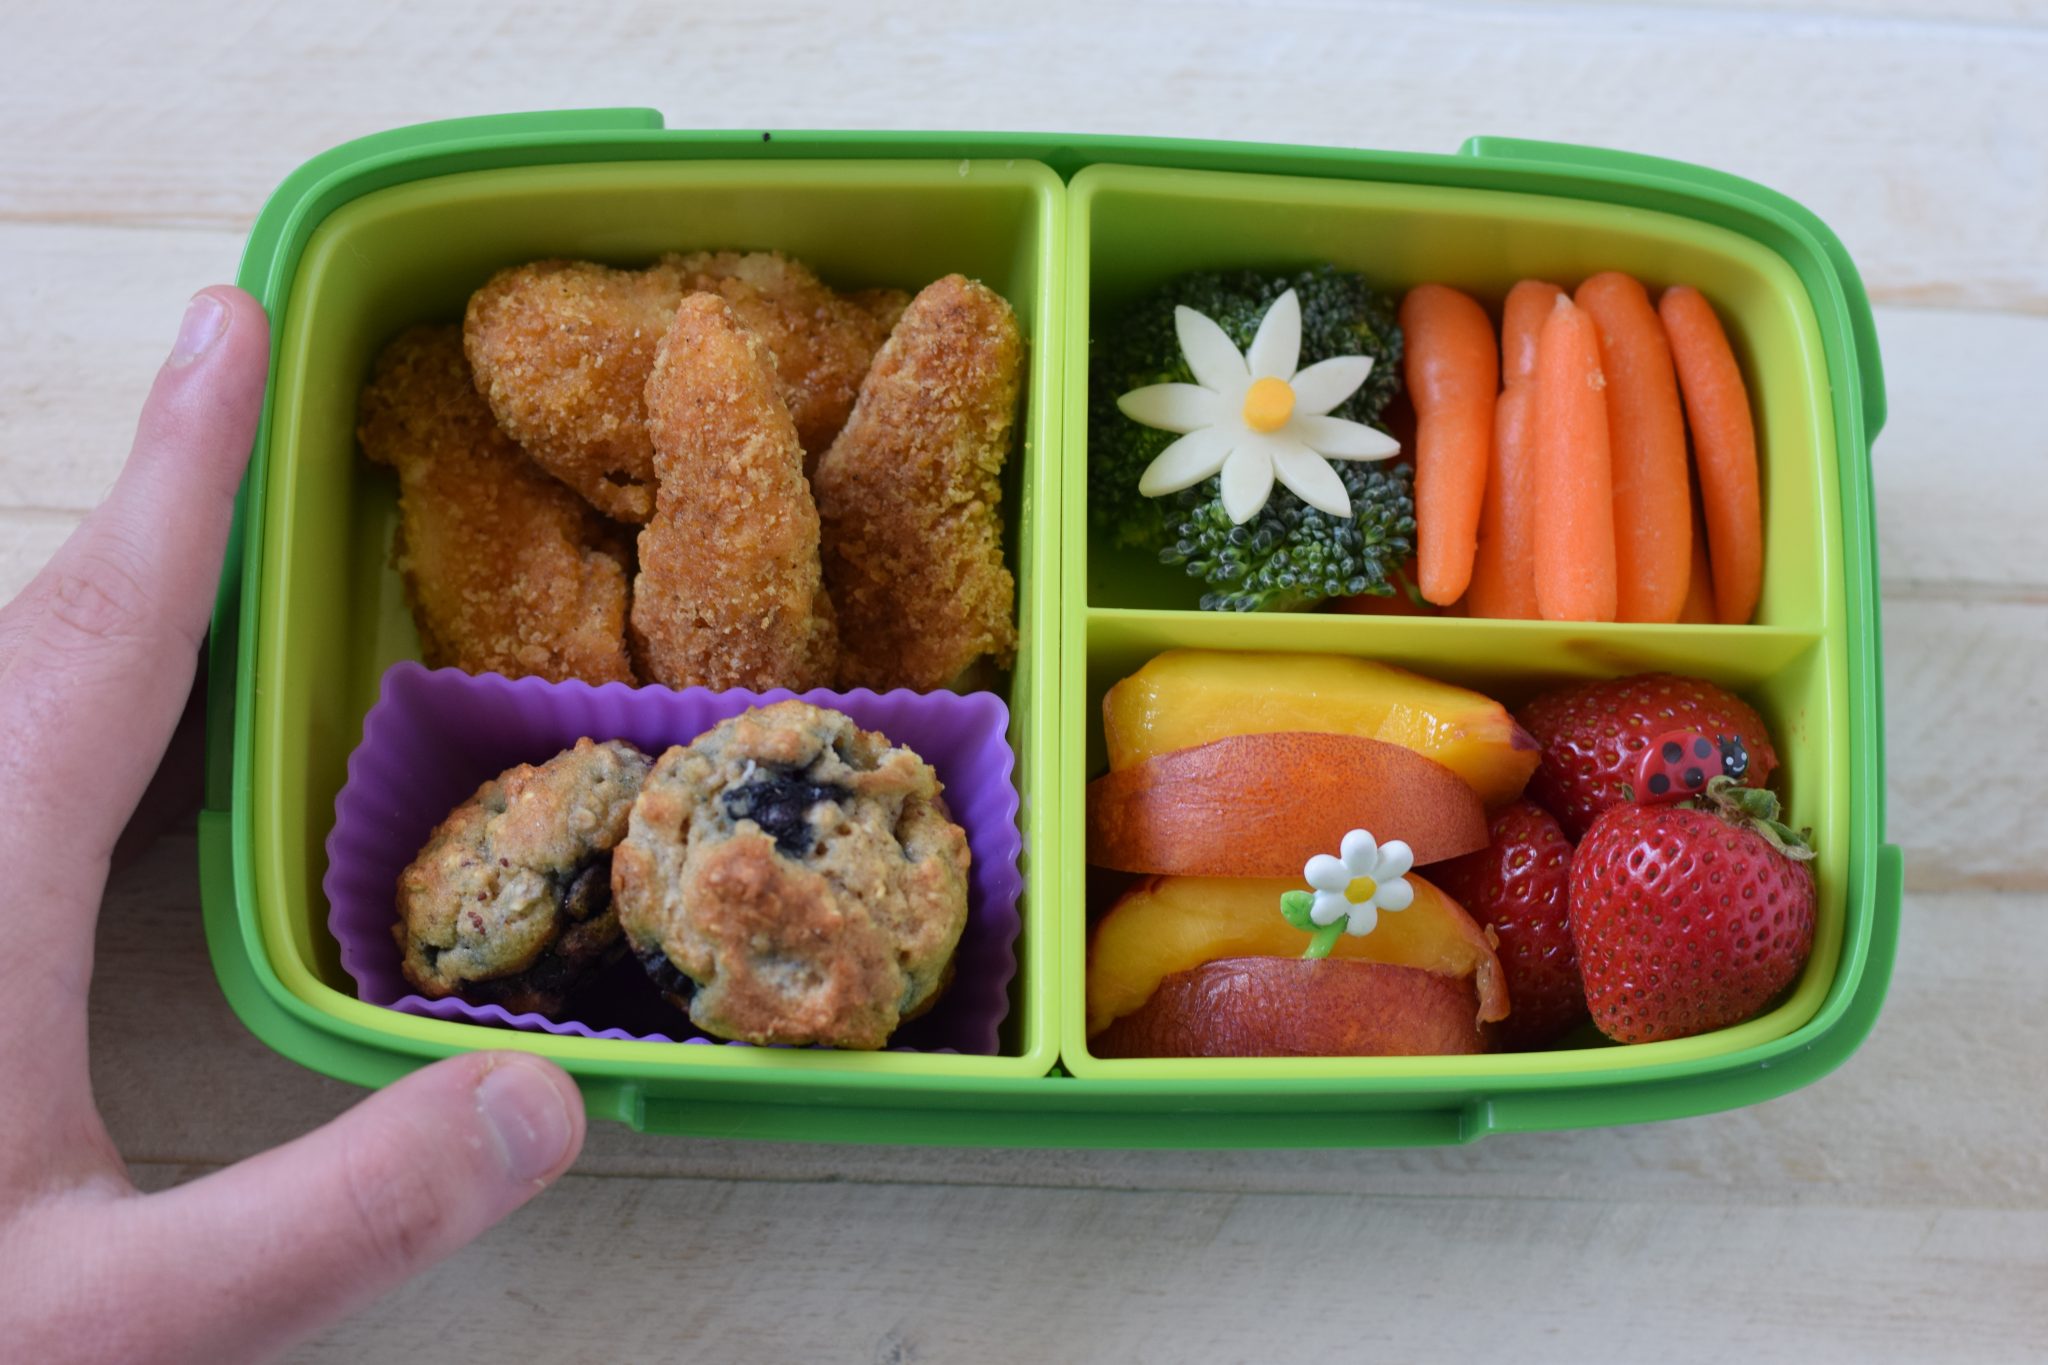 Healthy Lunch Bento Box Ideas - Bon Appétit